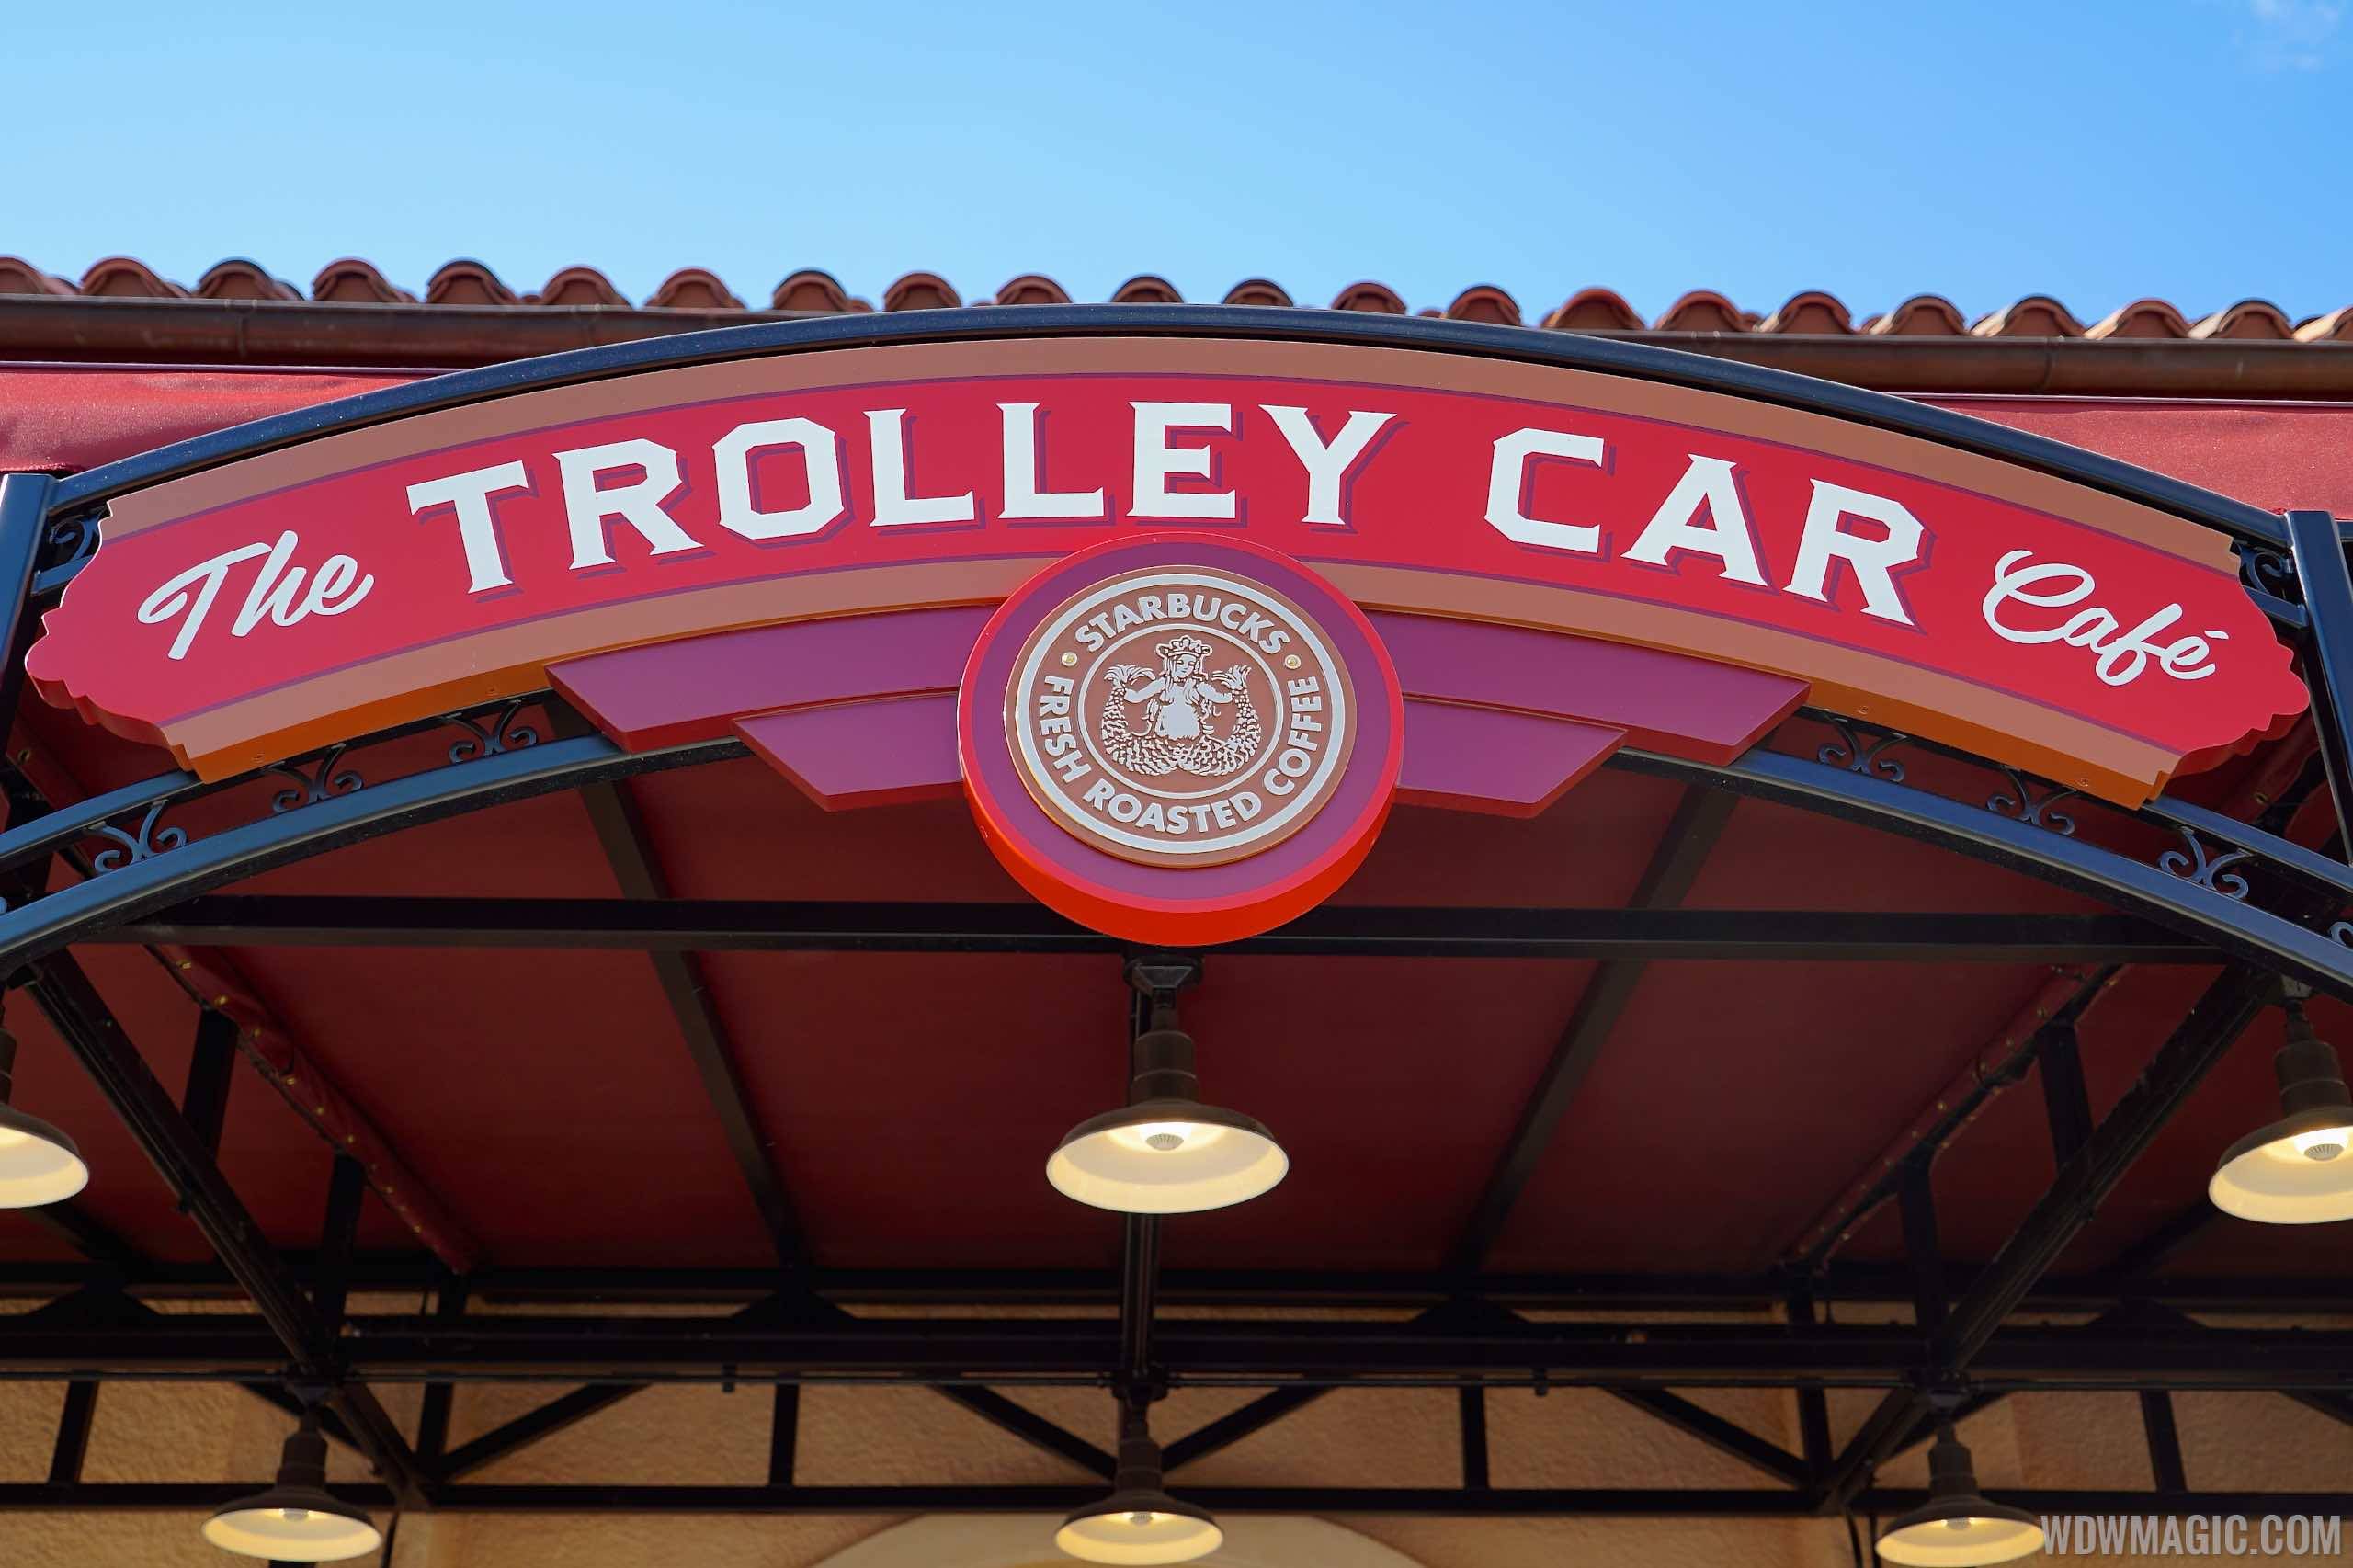 The Trolley Car Café overview